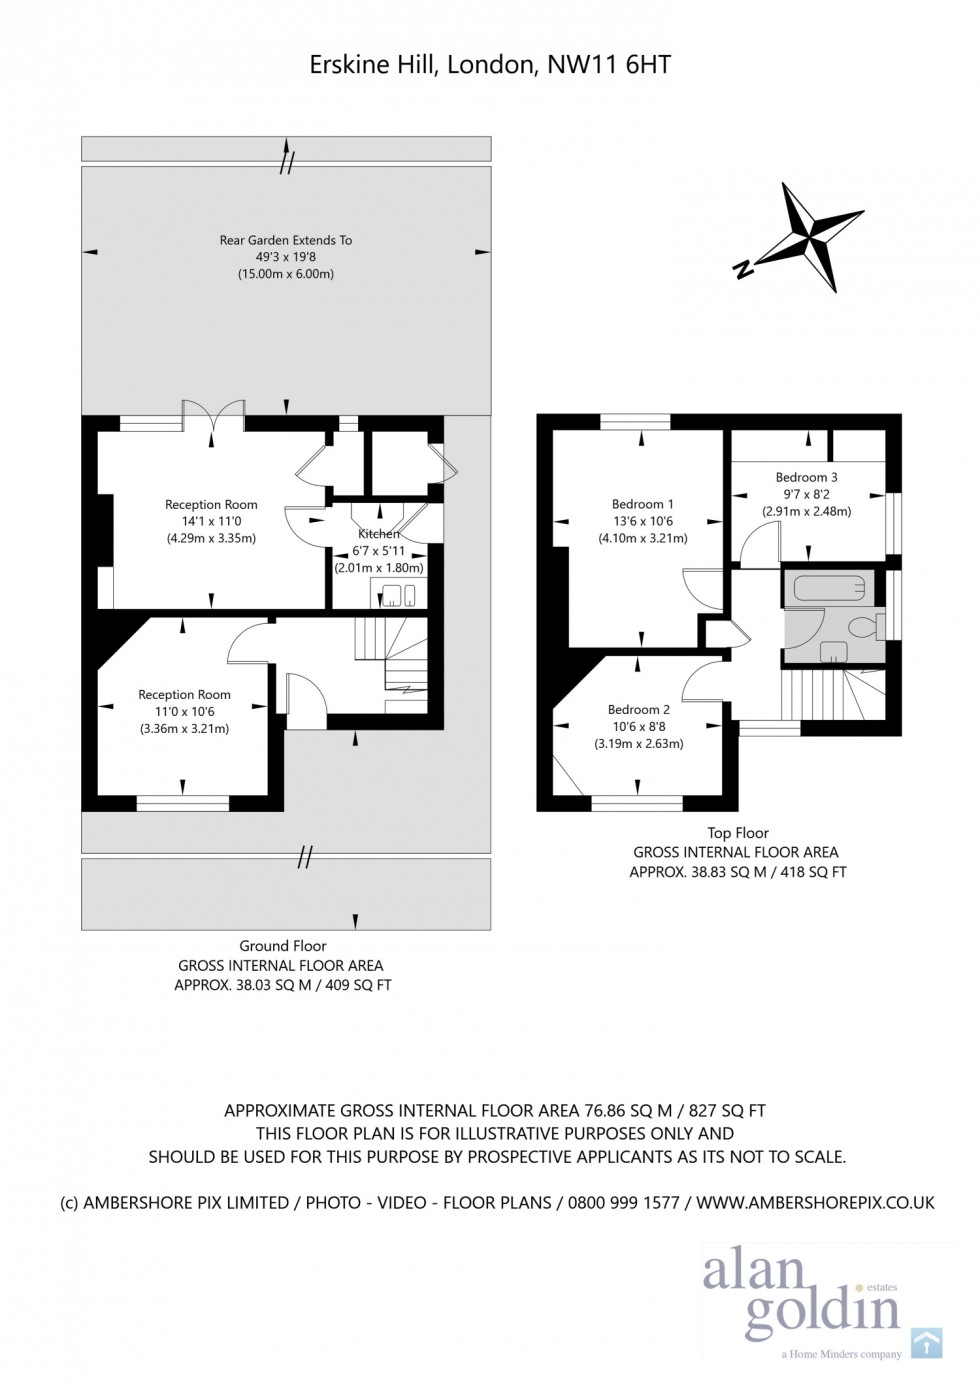 Floorplan for Erskine Hill, NW11